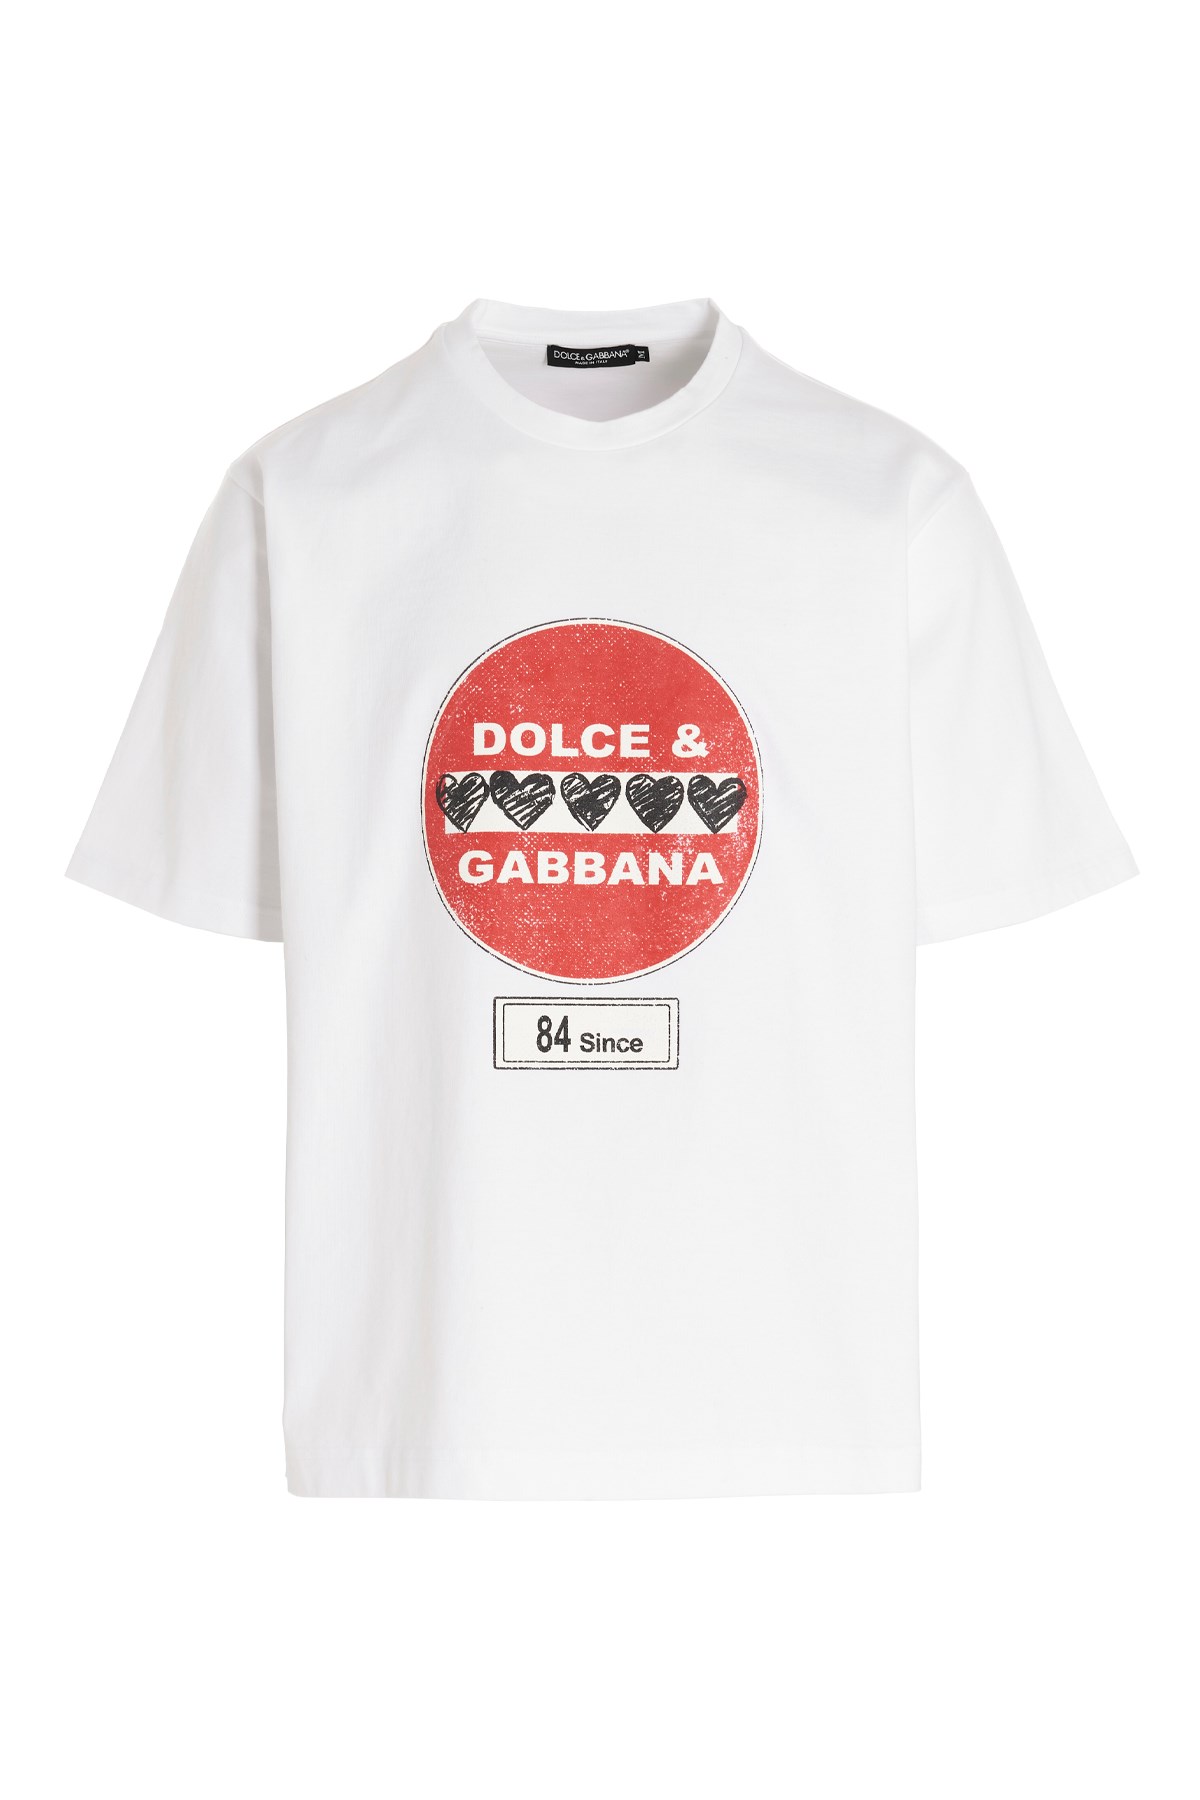 DOLCE & GABBANA 'Cartelli Stradali’ Print T-Shirt